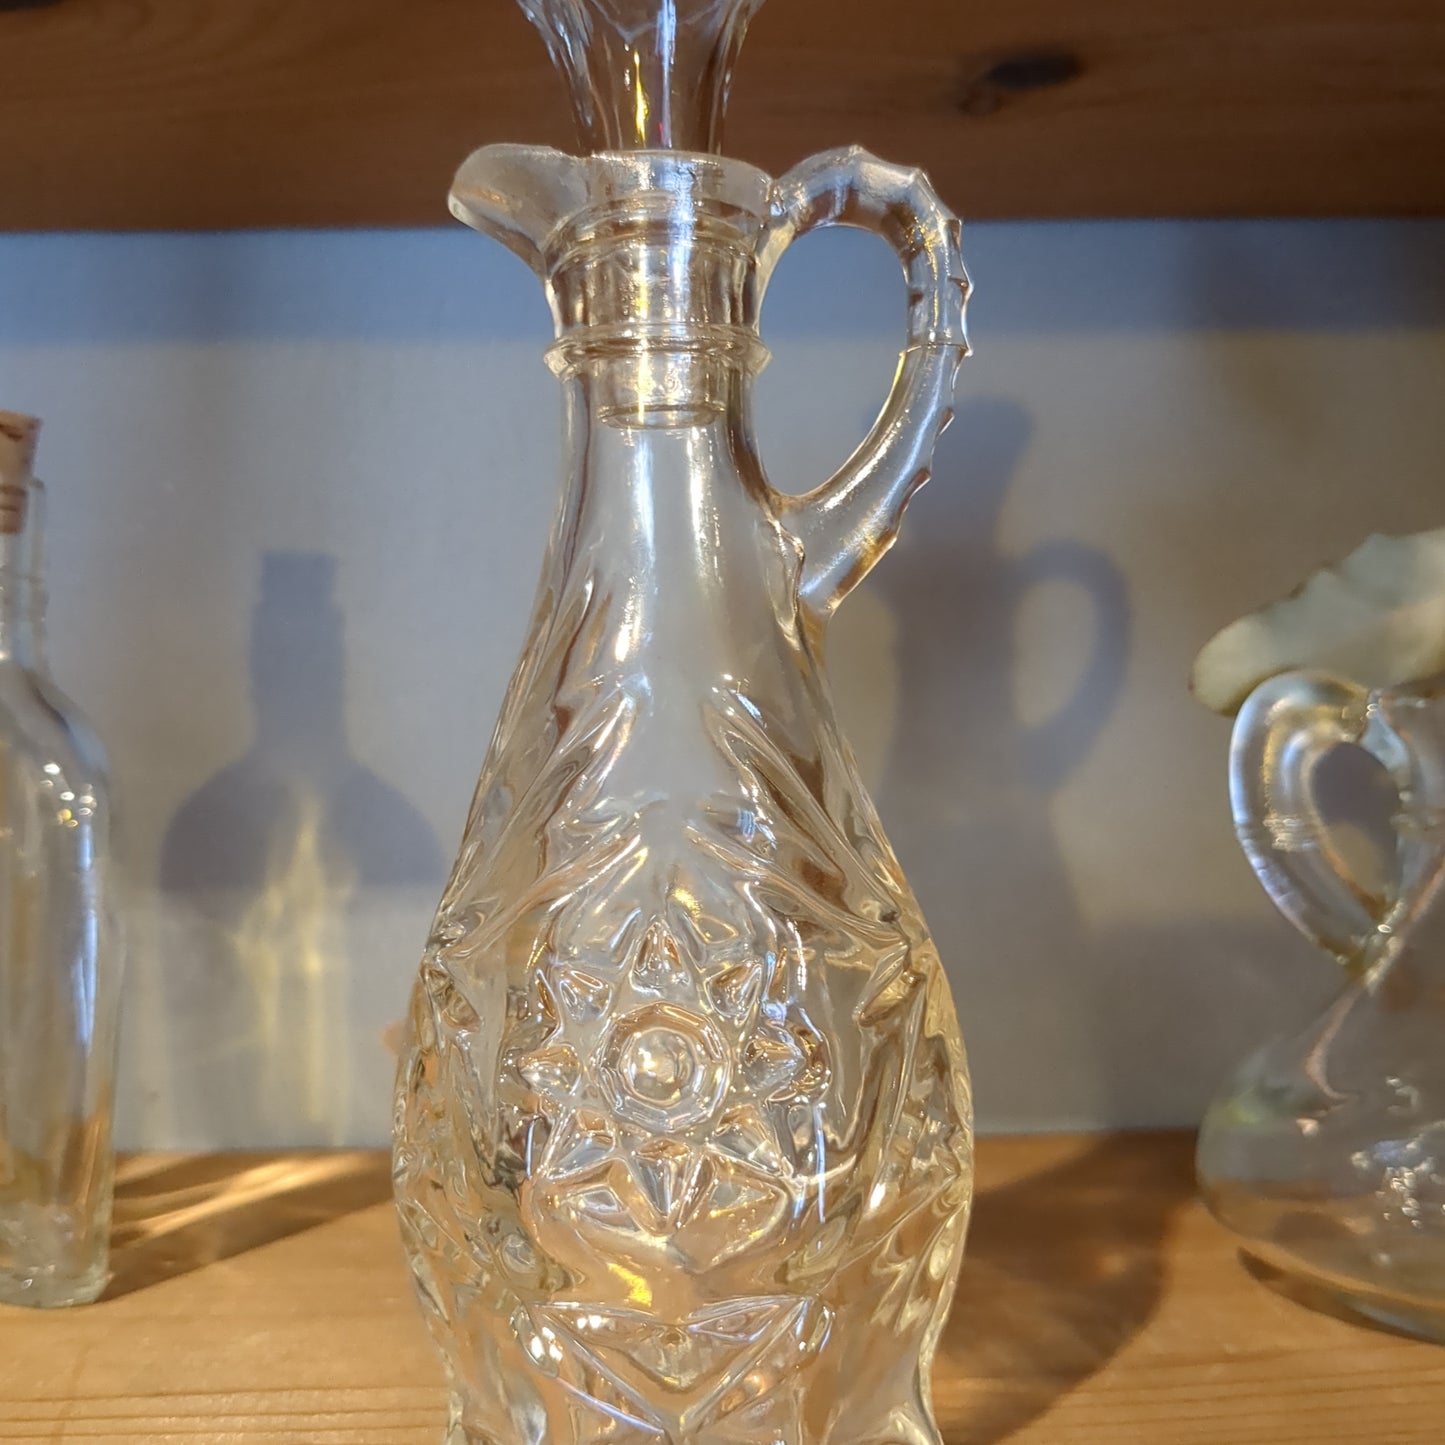 Vintage Glass Vase Pitcher with stopper